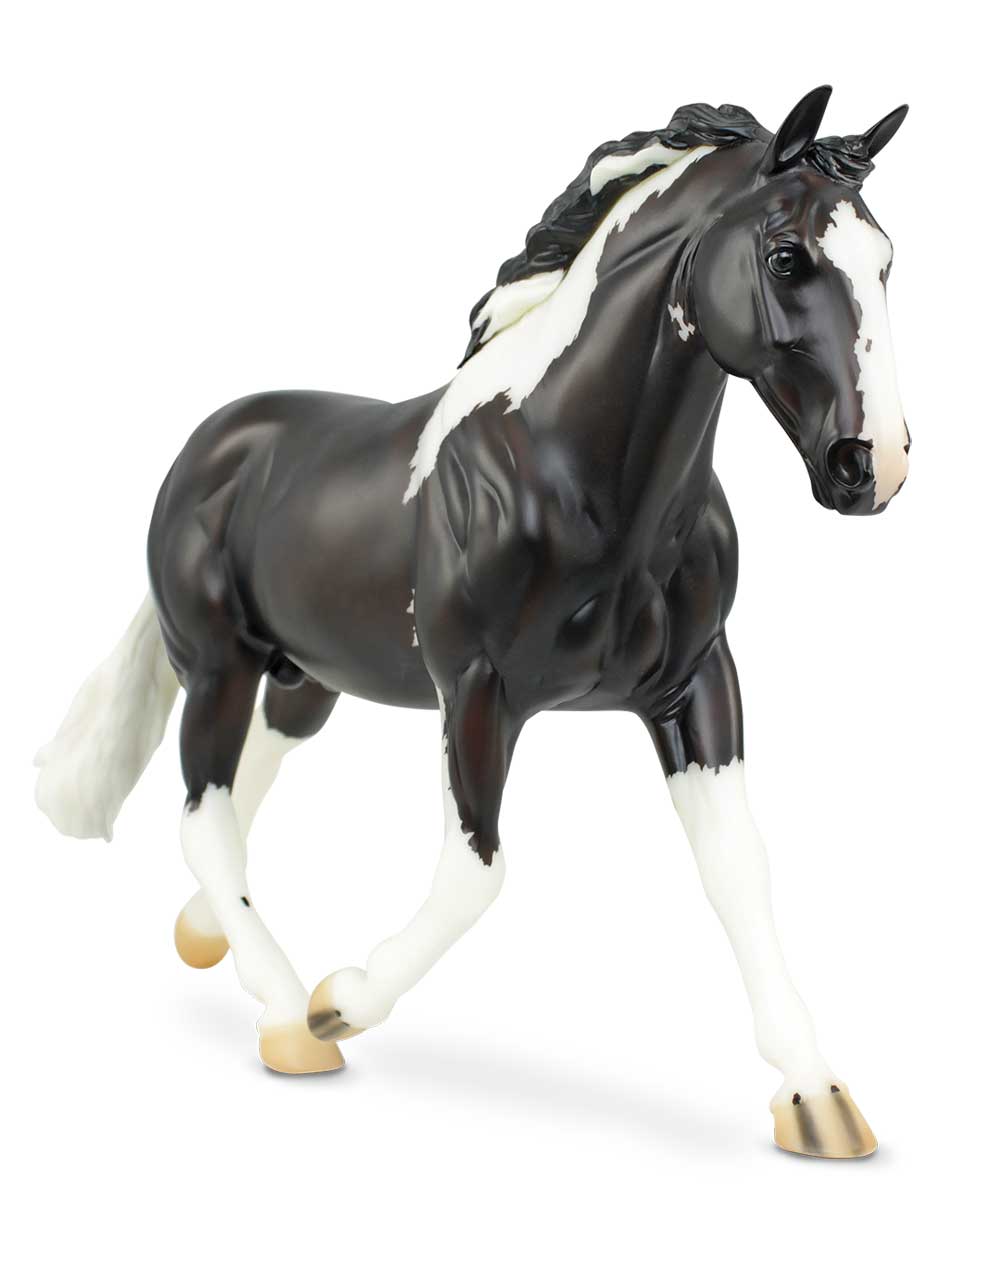 Oliver’s official BreyerFest Celebration model horse. 